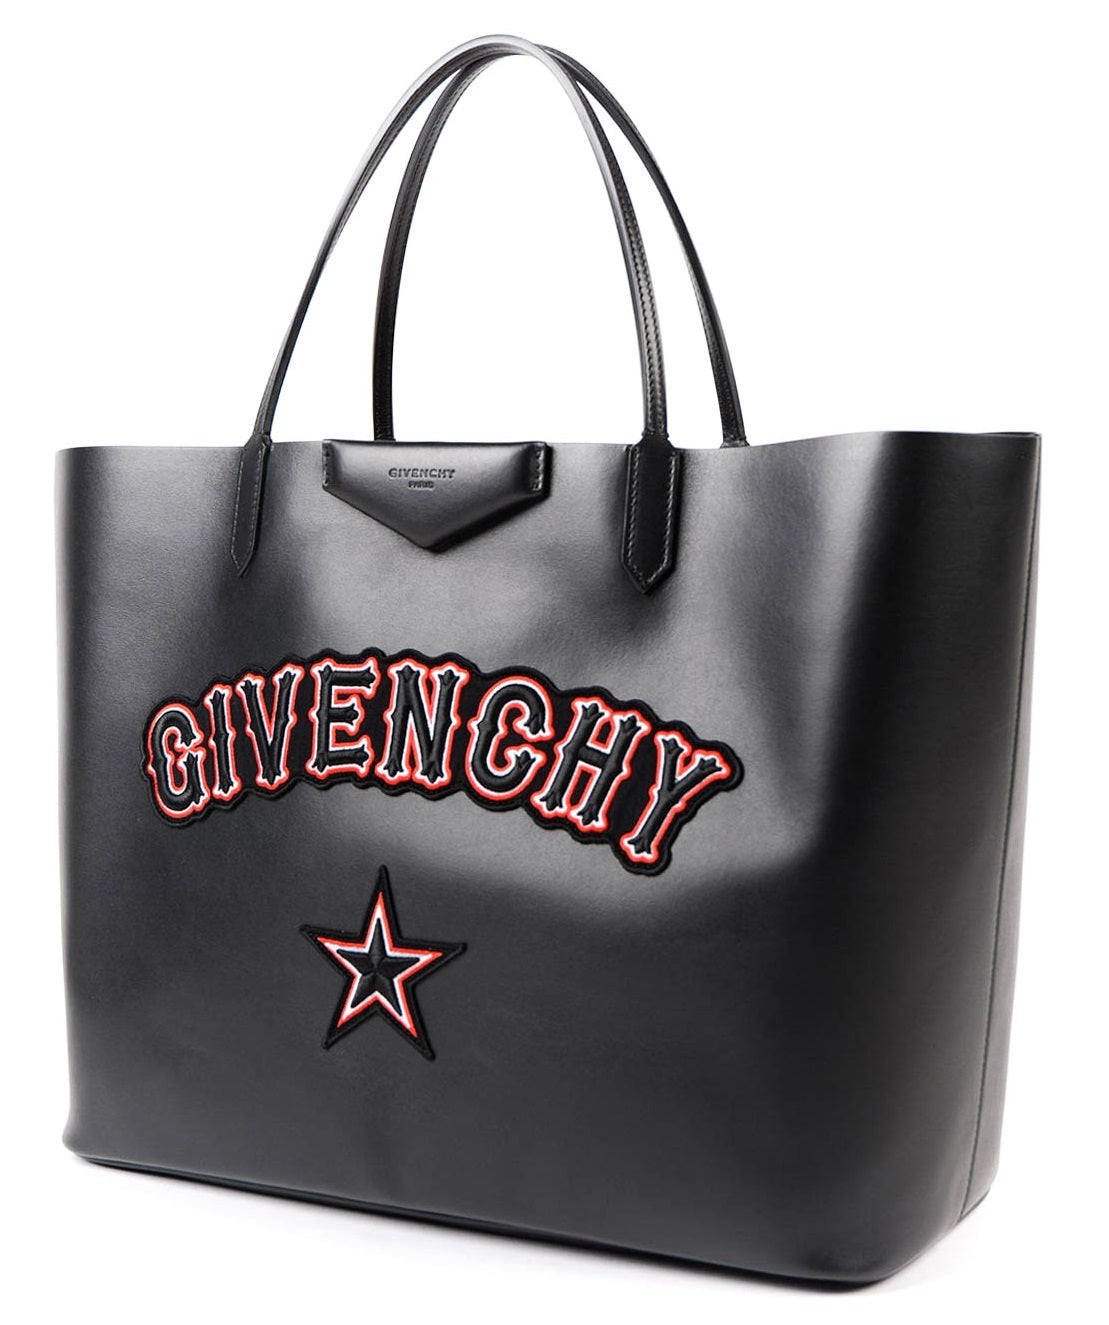 bags similar to neverfull givenchy online totes bags antigona large shopping bag